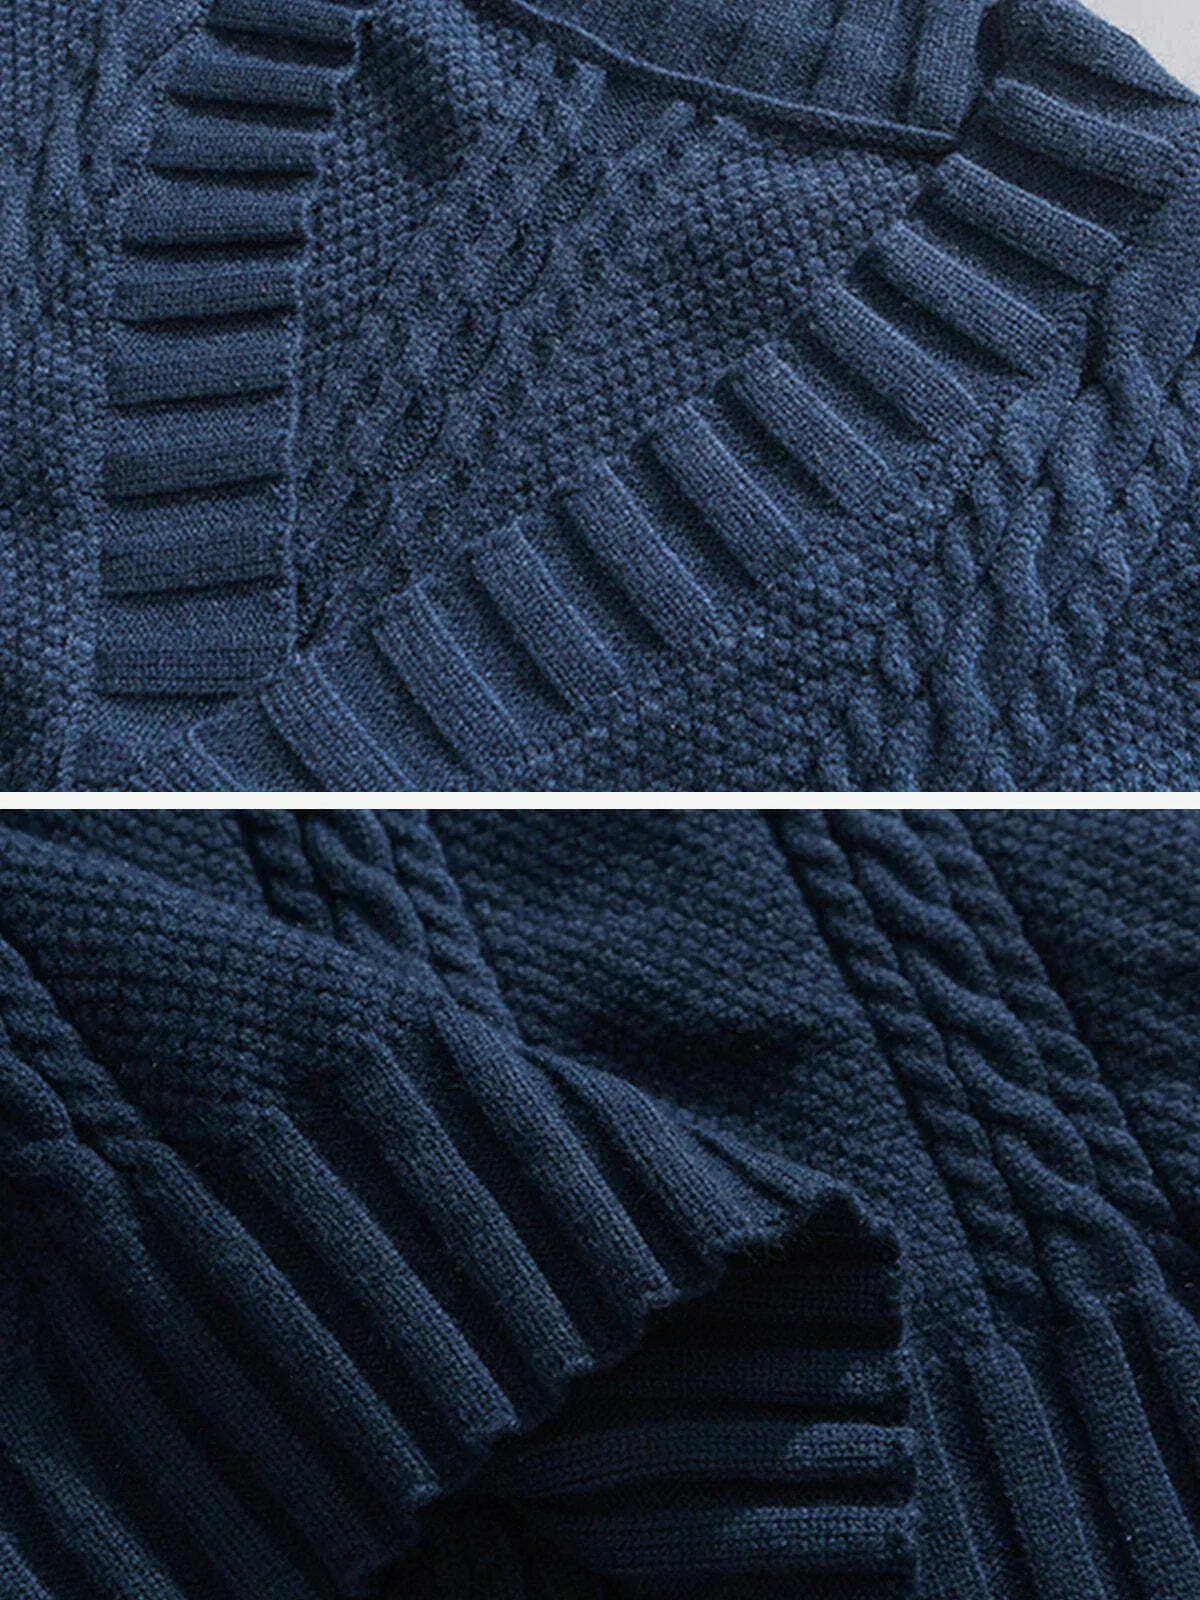 braided knit sweater vest edgy y2k fashion essential 5258